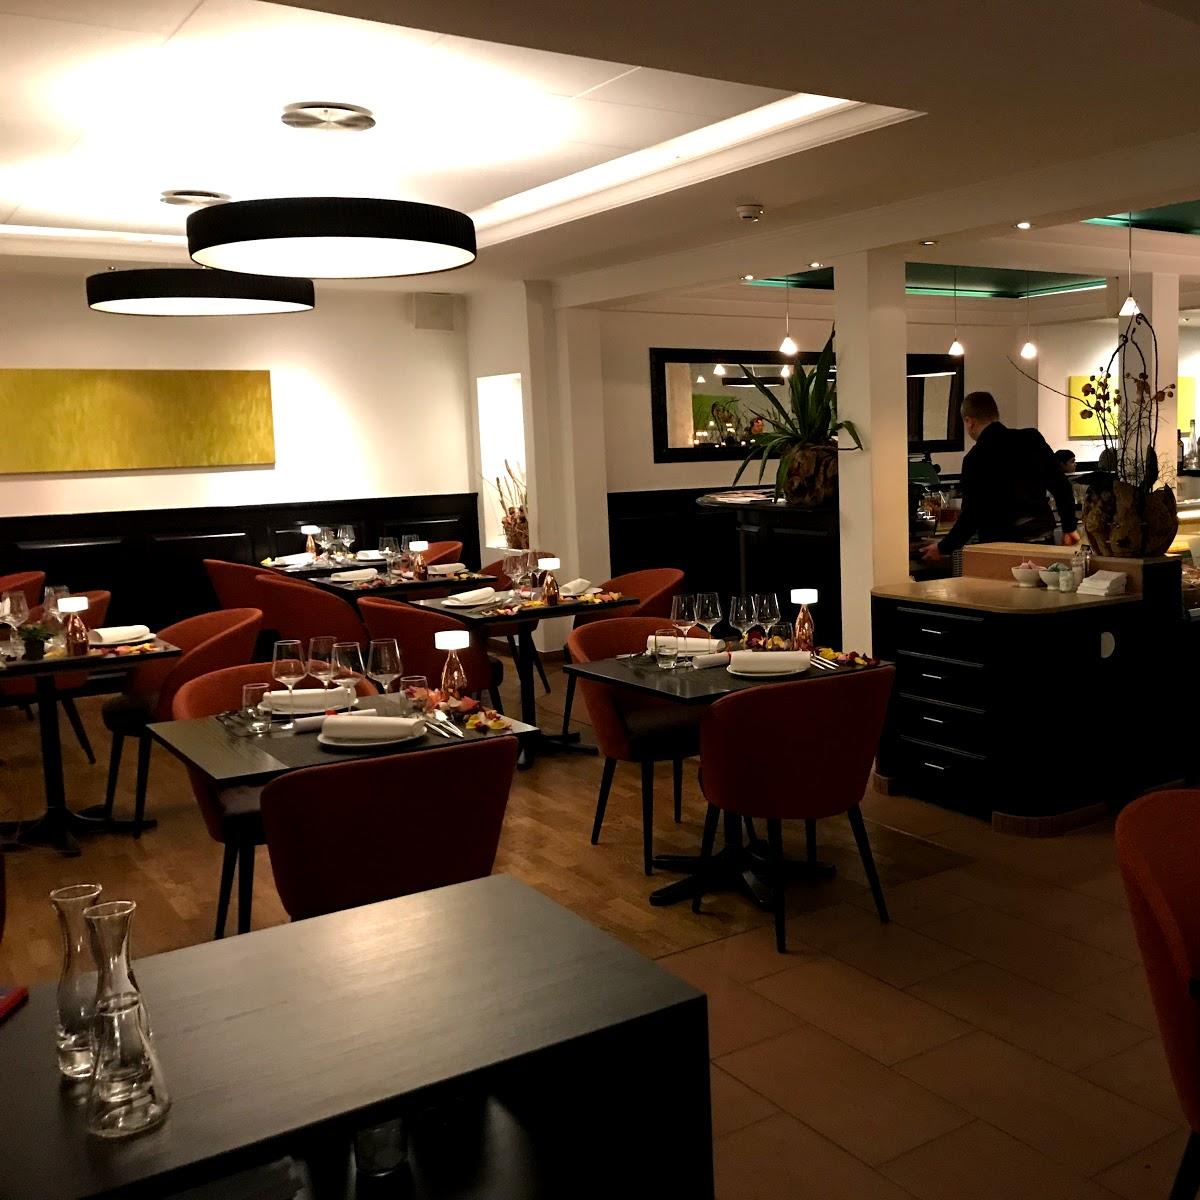 Restaurant "Mille Sens" in Bern